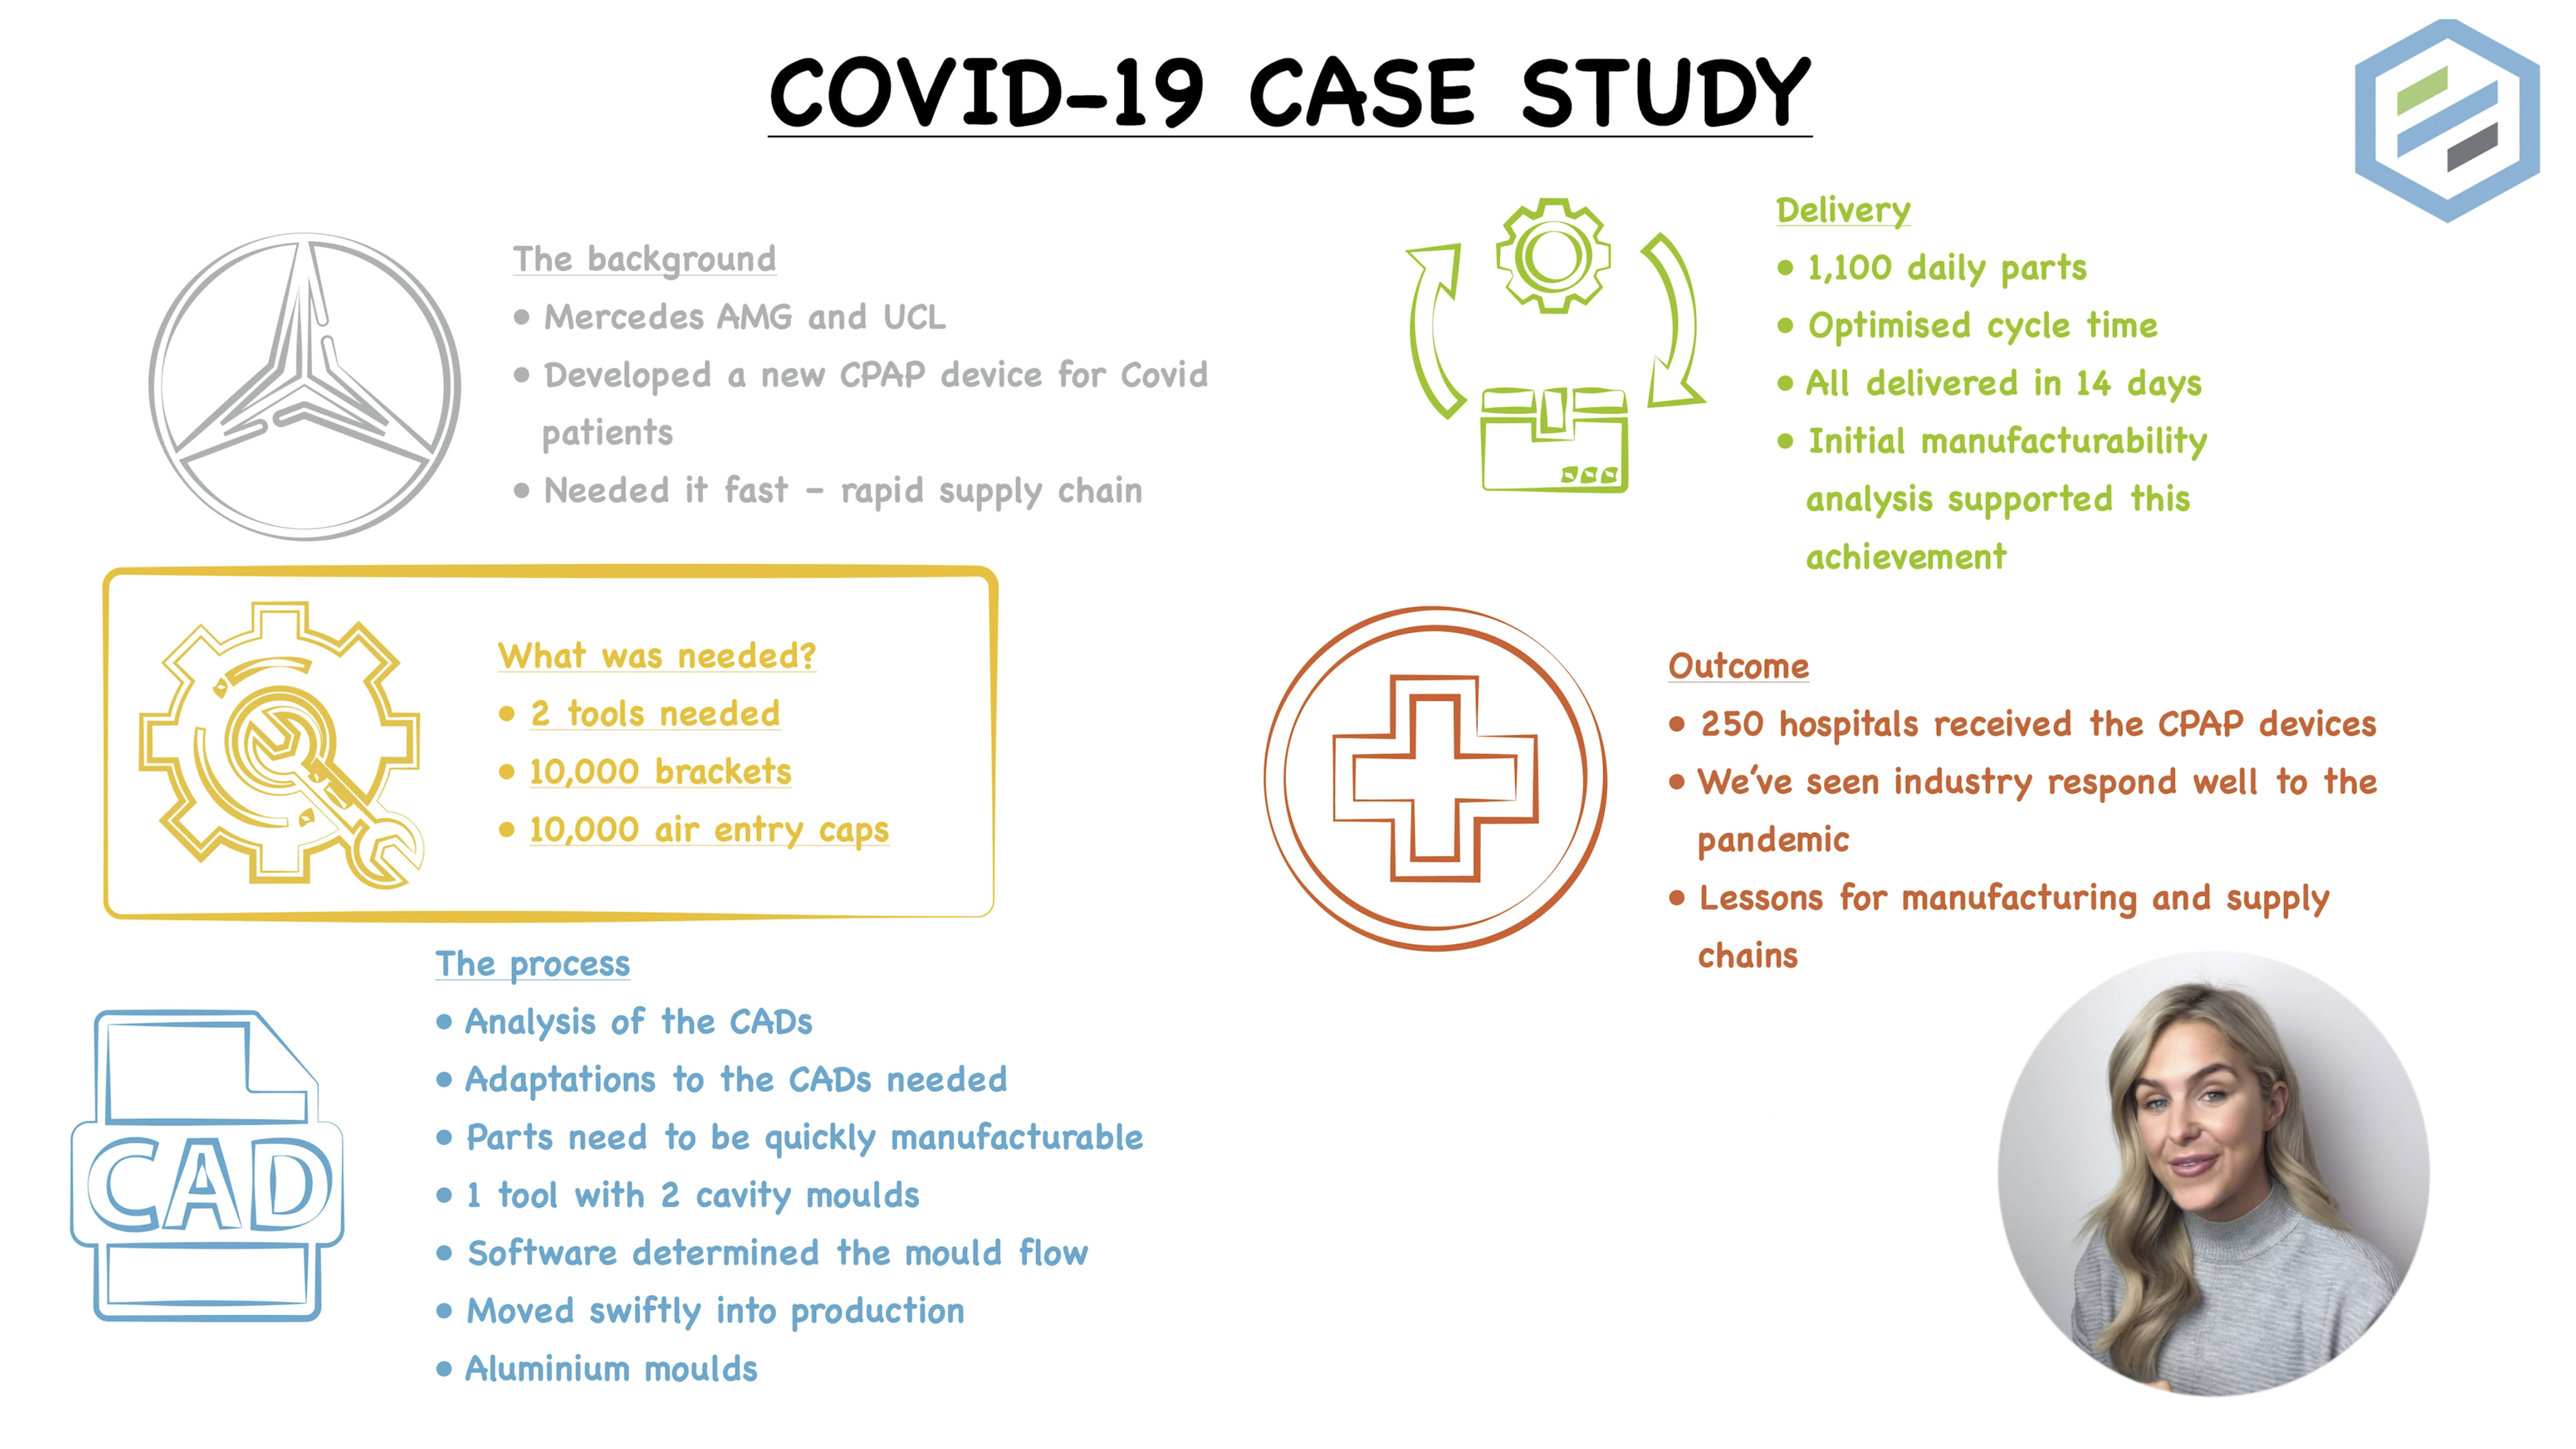 impact of covid 19 case study